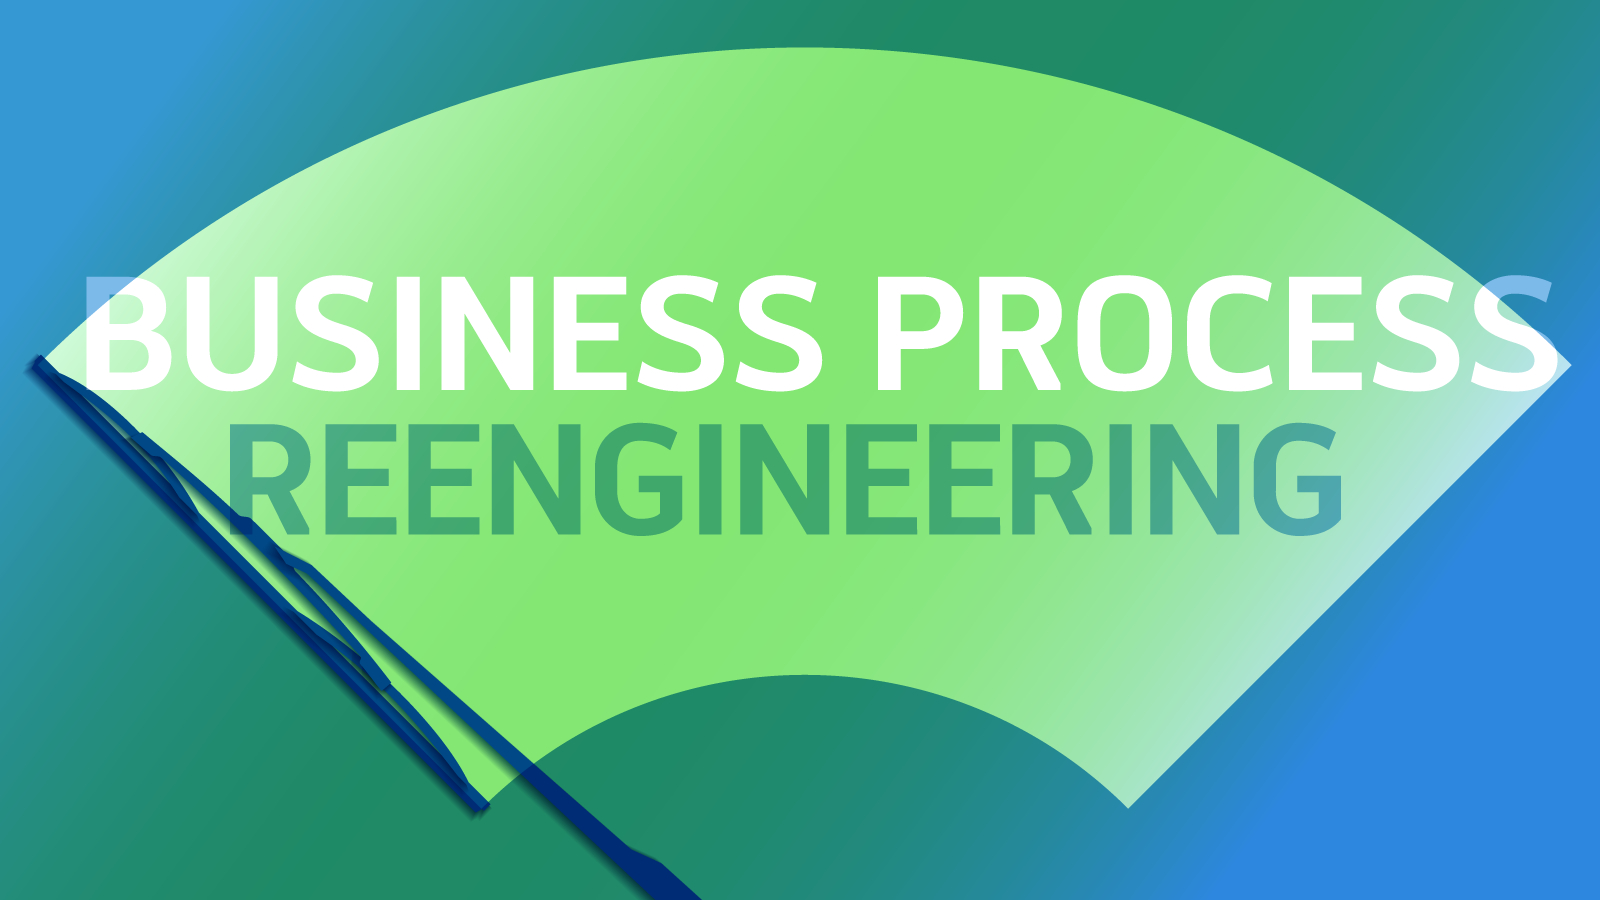 Tổng quan về Business Process Reengineering